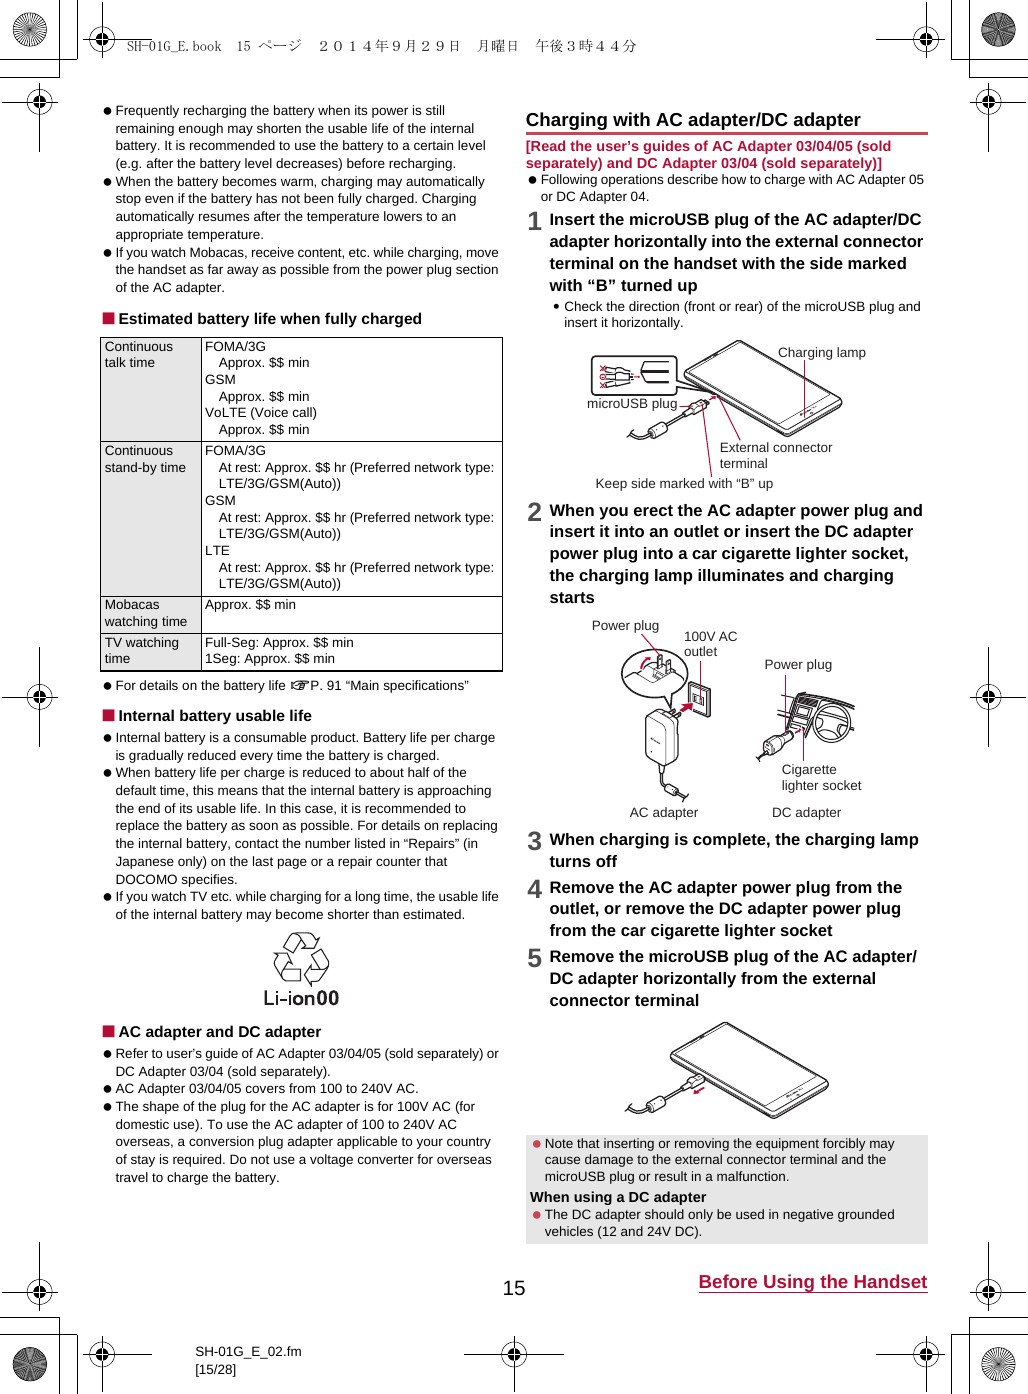 Page 11 of Sharp HRO00212 Smart Phone User Manual